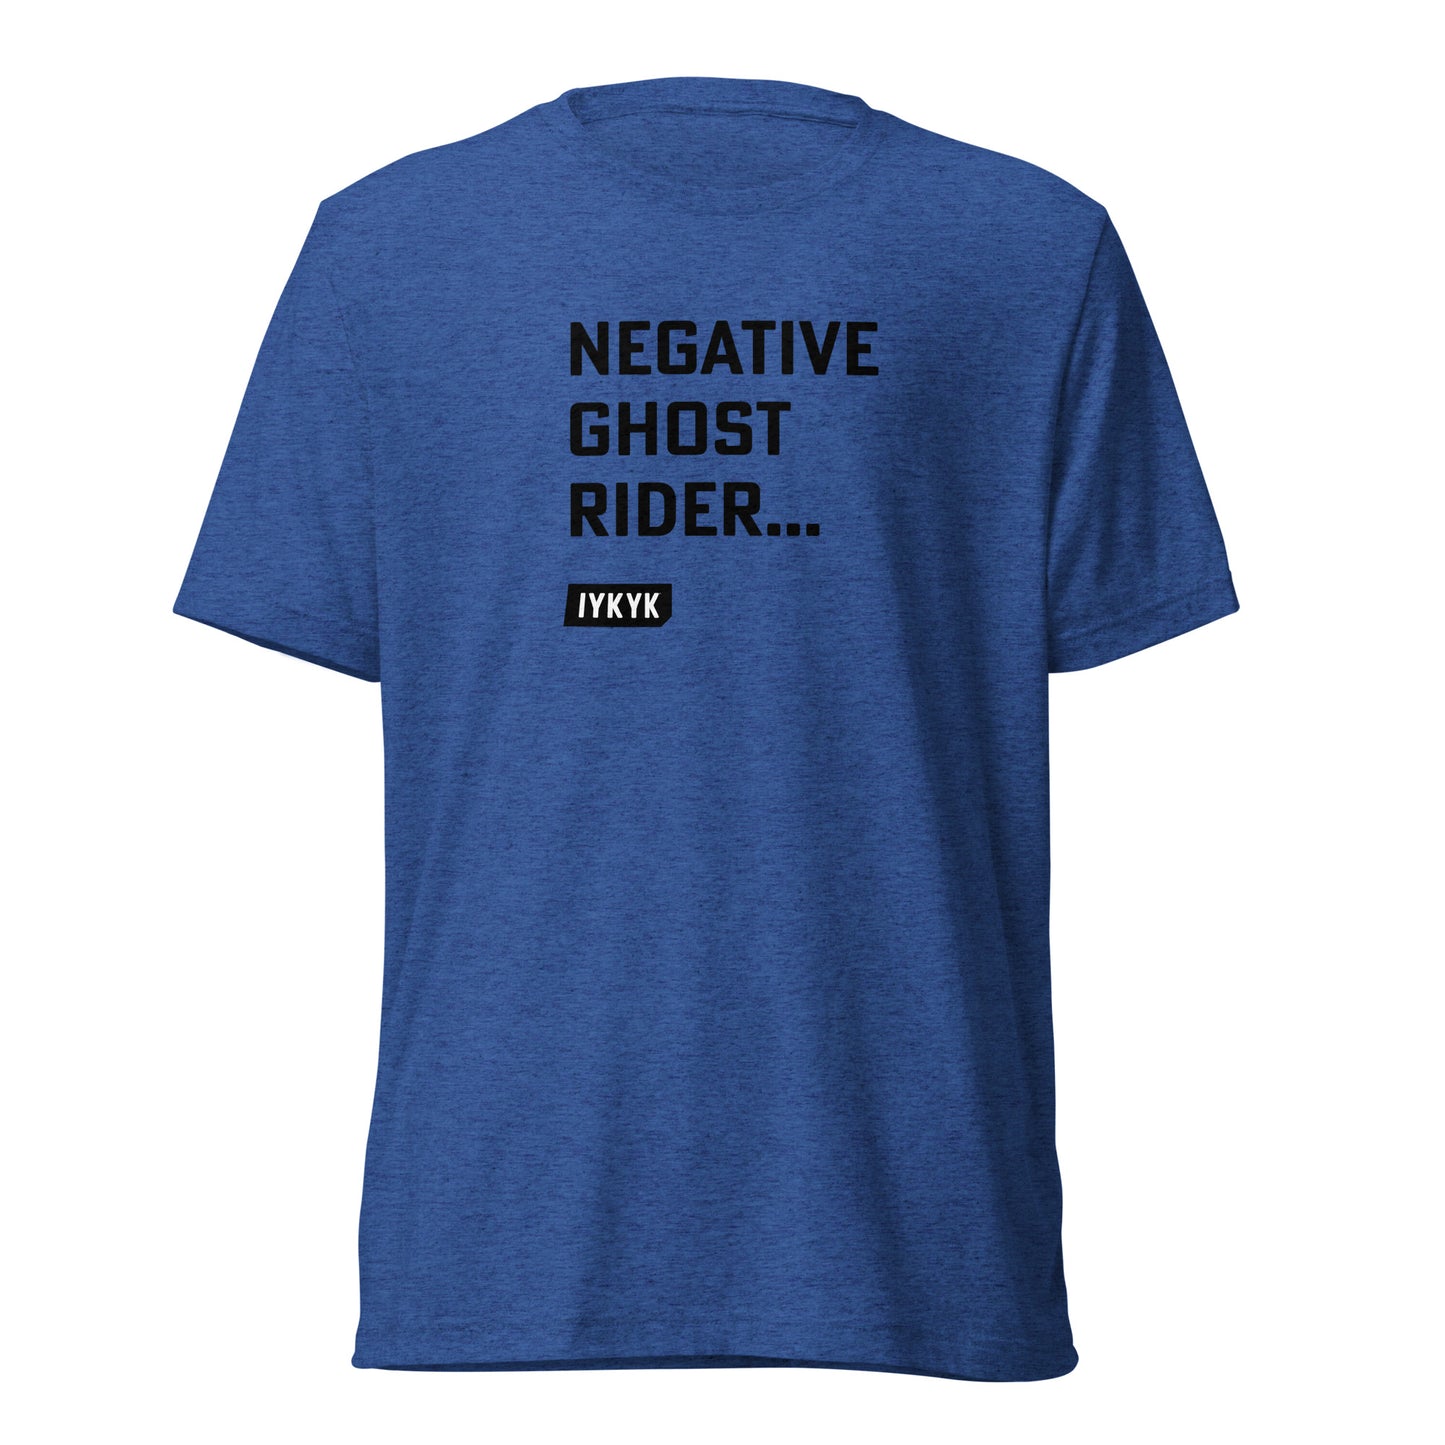 Premium Everyday Negative Ghost Rider... Top Gun Tee